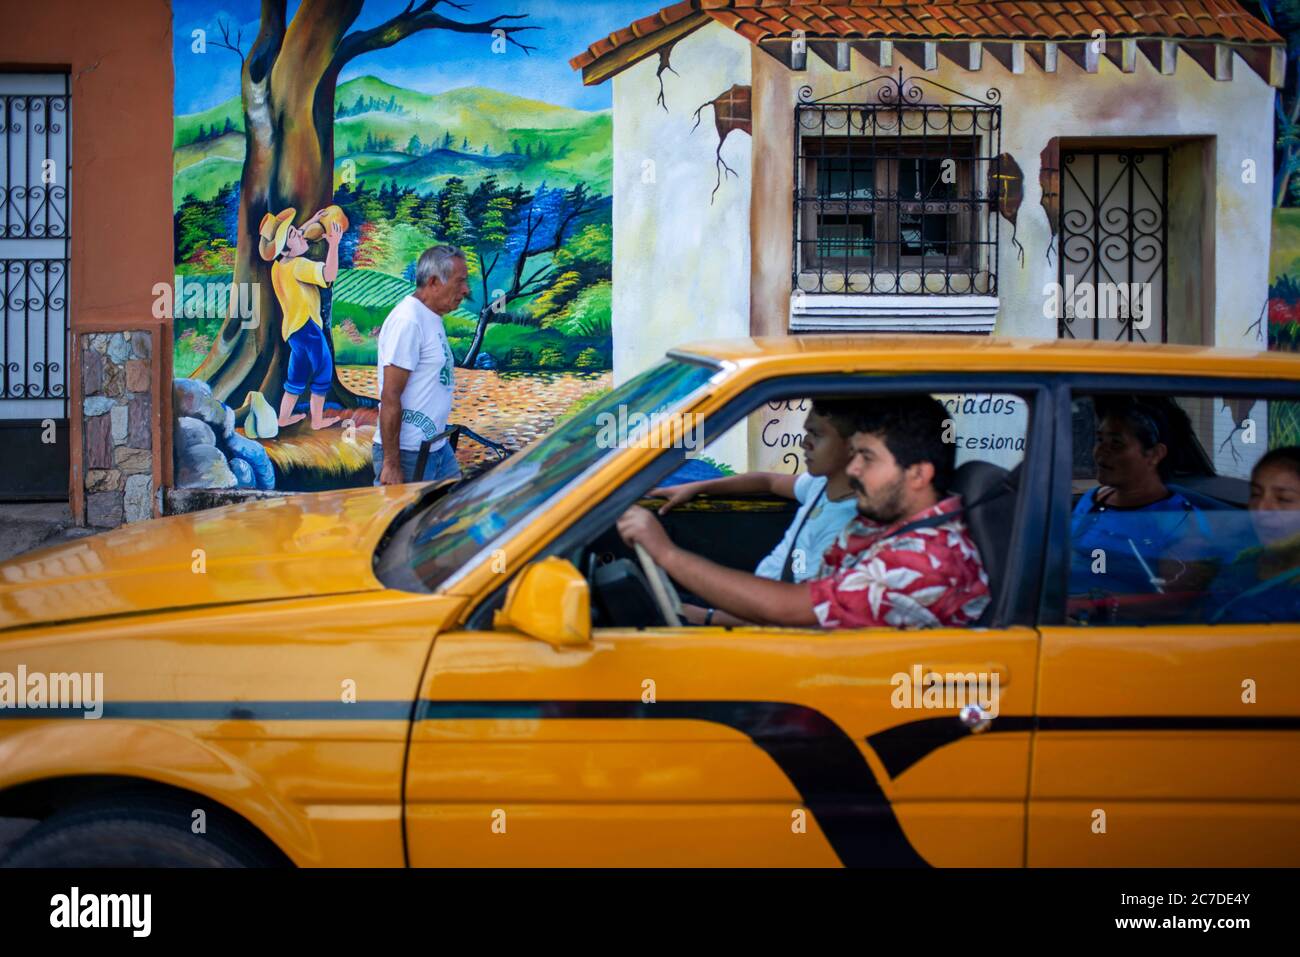 Taxi and Wall street art graffiti in Salcoatitan Sonsonate El Salvador Central America. Ruta De Las Flores, Department Of Sonsonate. Stock Photo